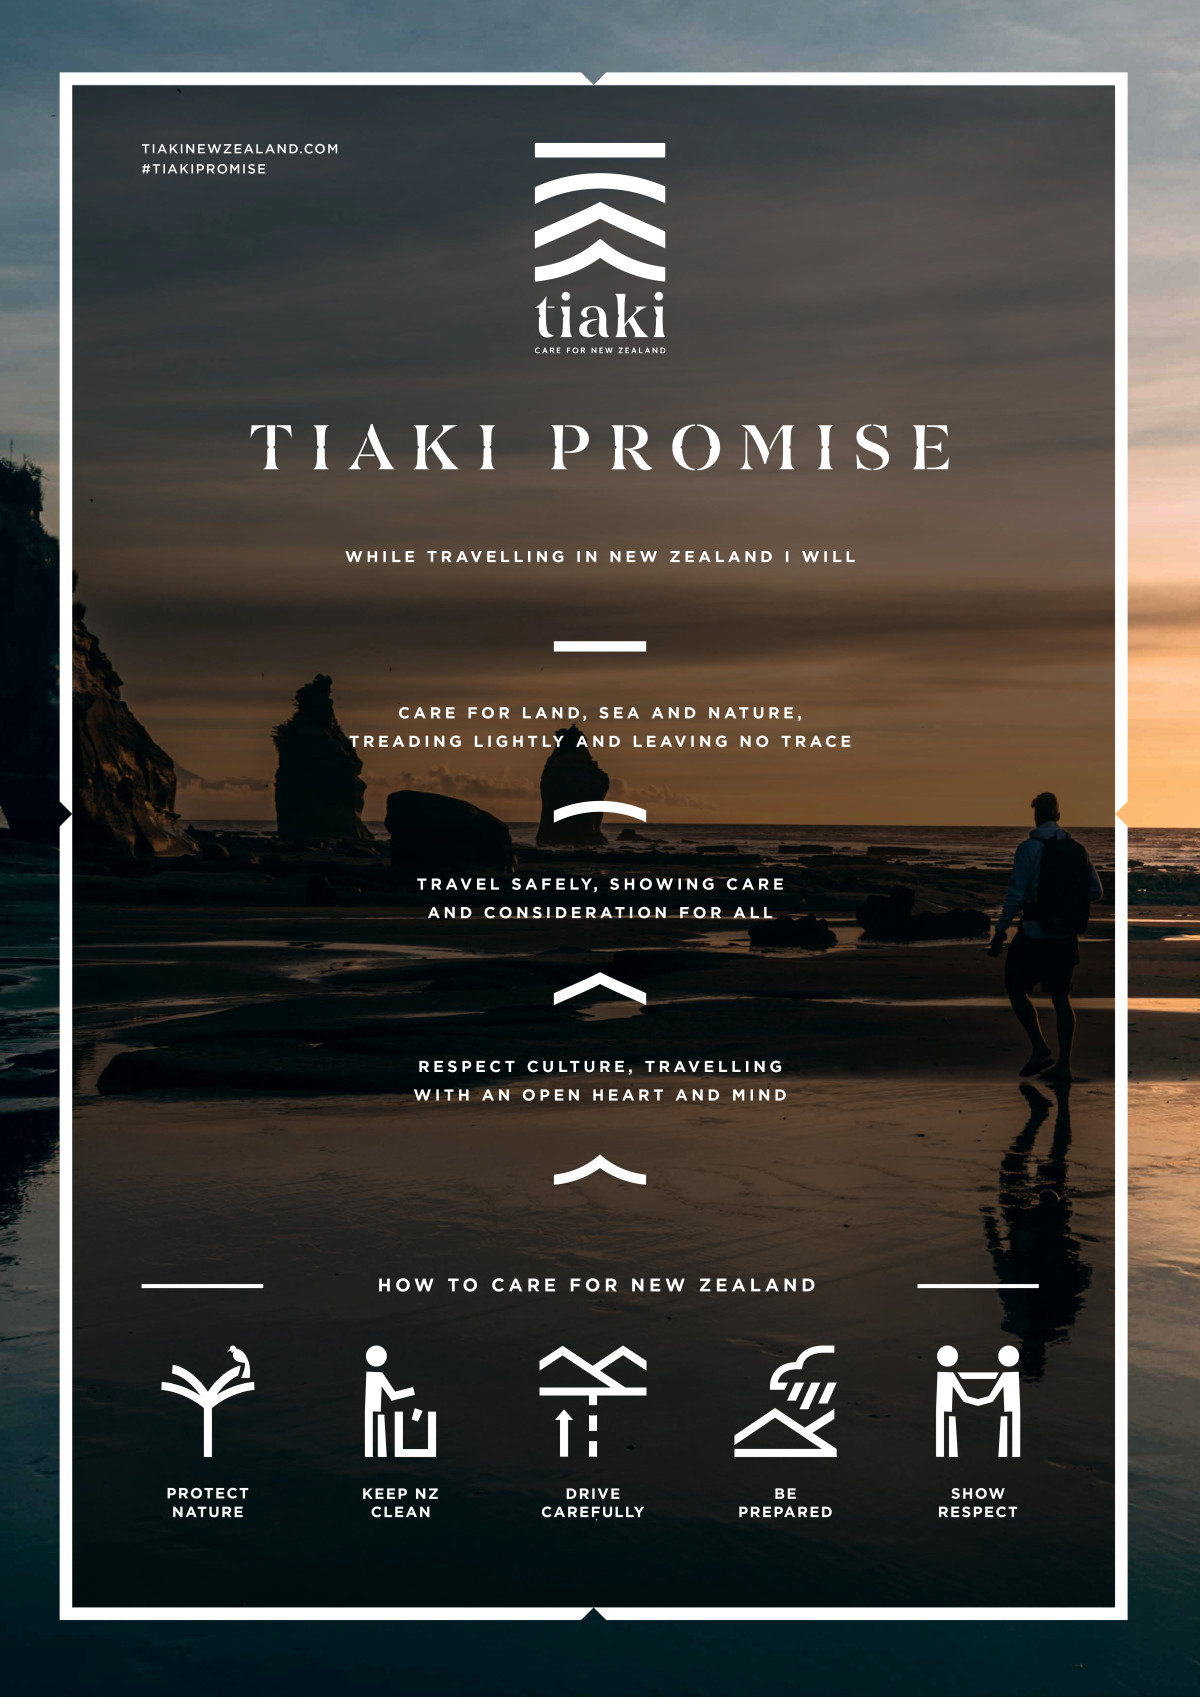 tiaki-promise-commitments_resizedimagewzeymdasmty5n10.jpg